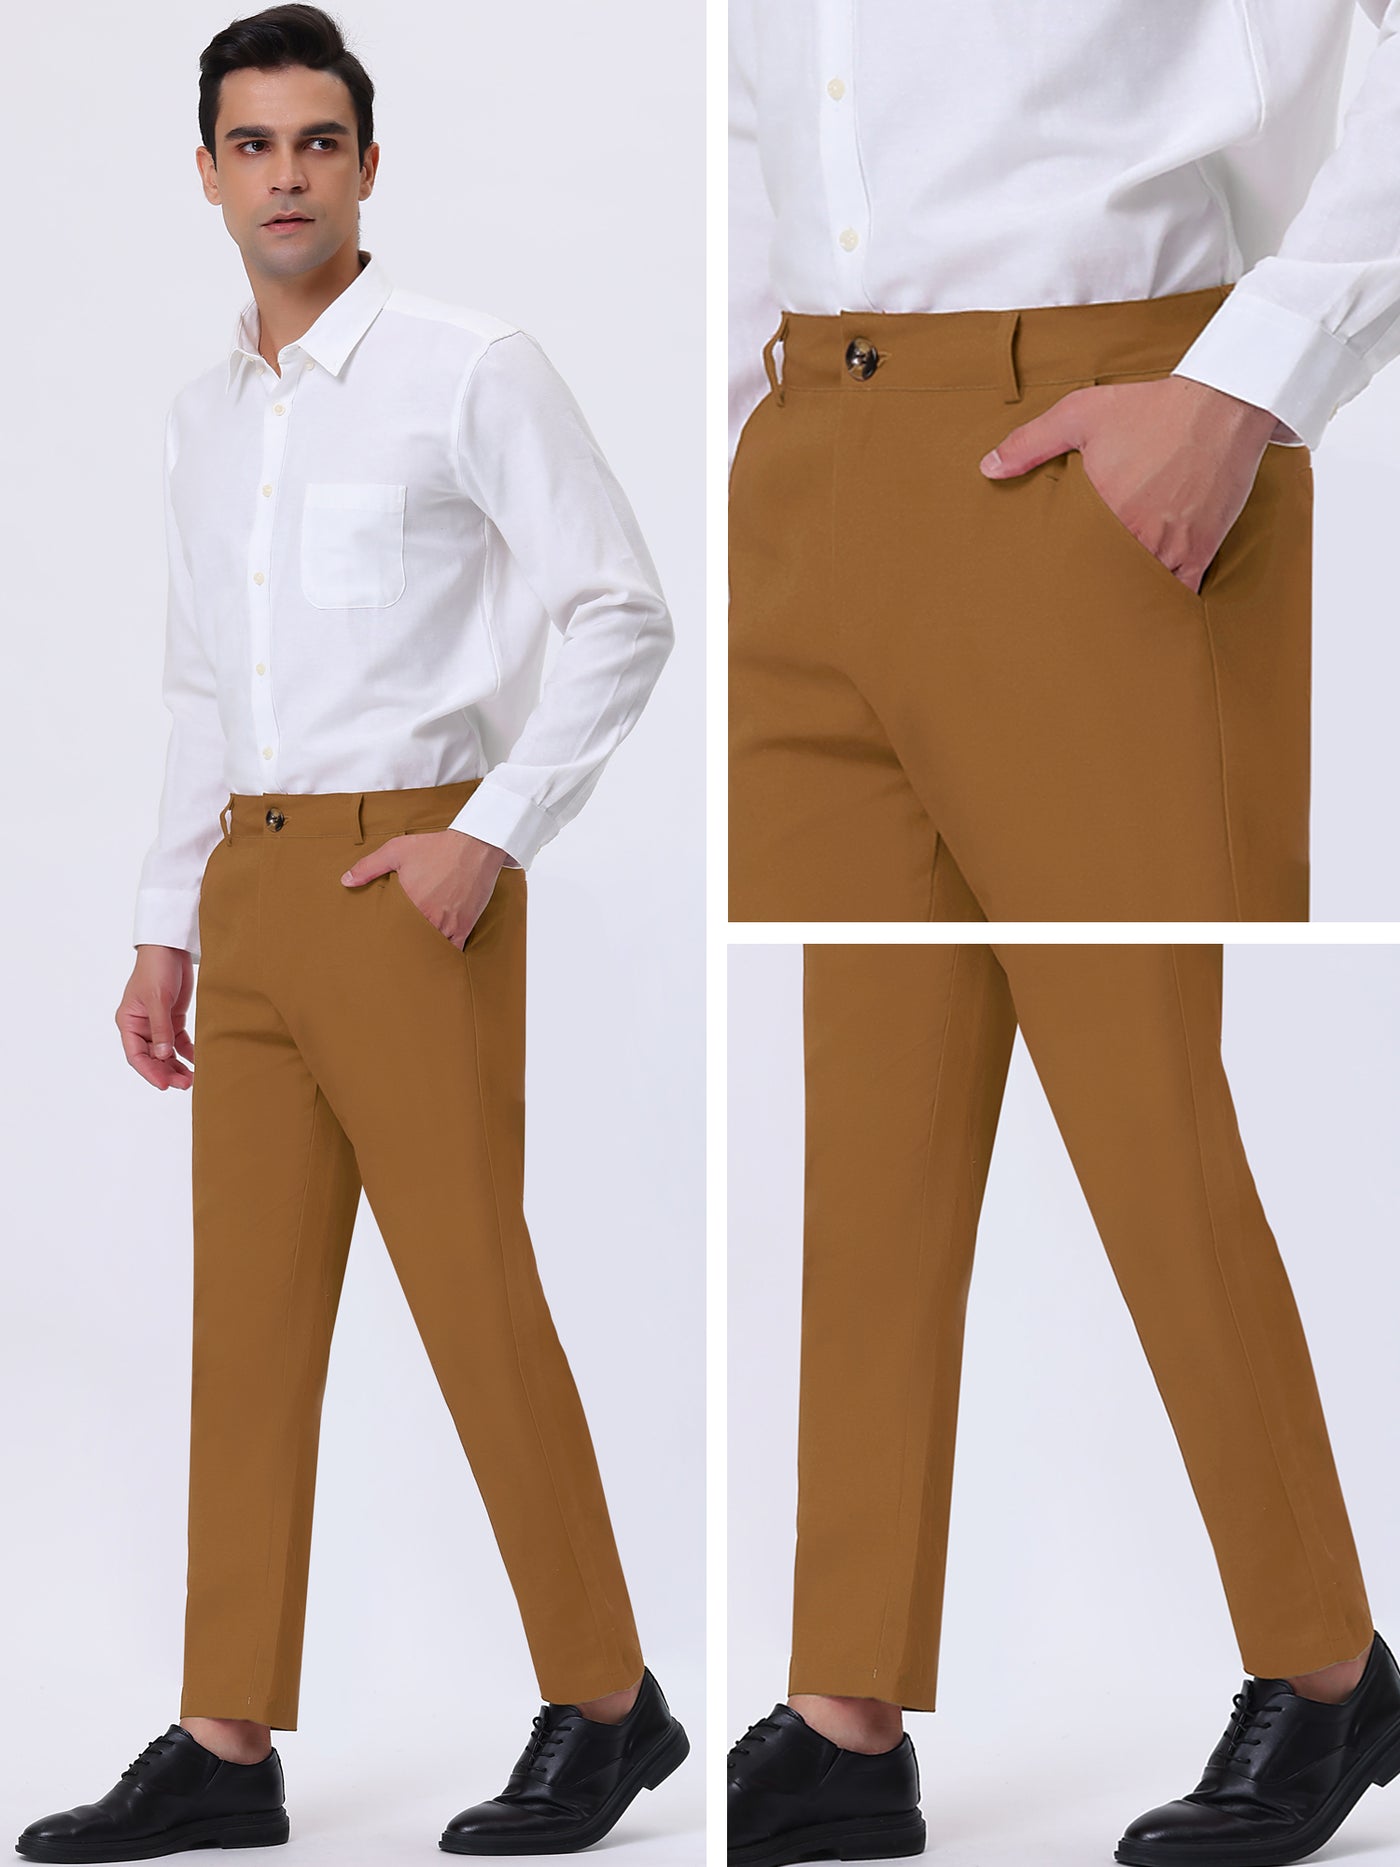 Bublédon Men's Solid Color Slacks Straight Fit Flat Front Chino Dress Pants